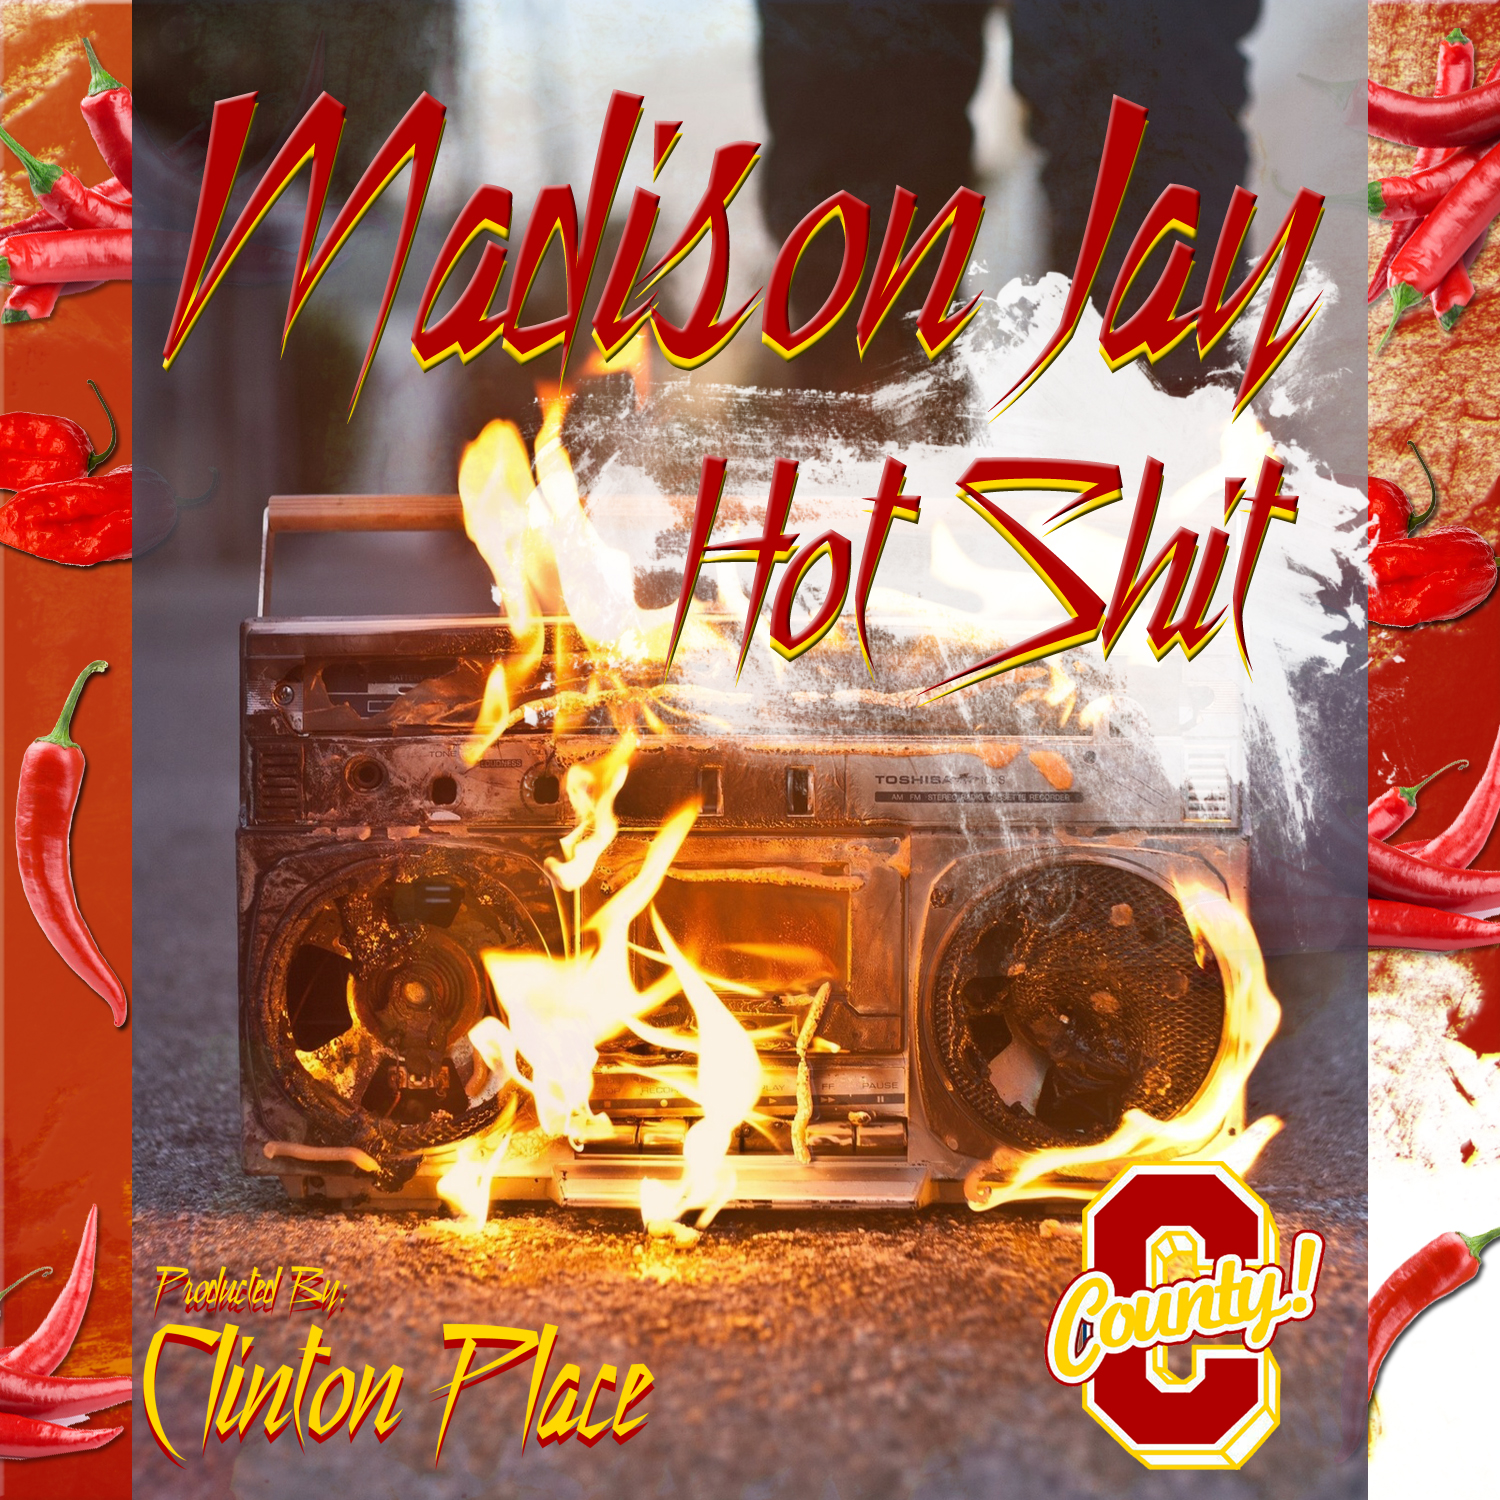 NC Madison Jay drops Hot Sh!T New single Produced by Clinton Place @themadisonjay @ClintonPLBeats